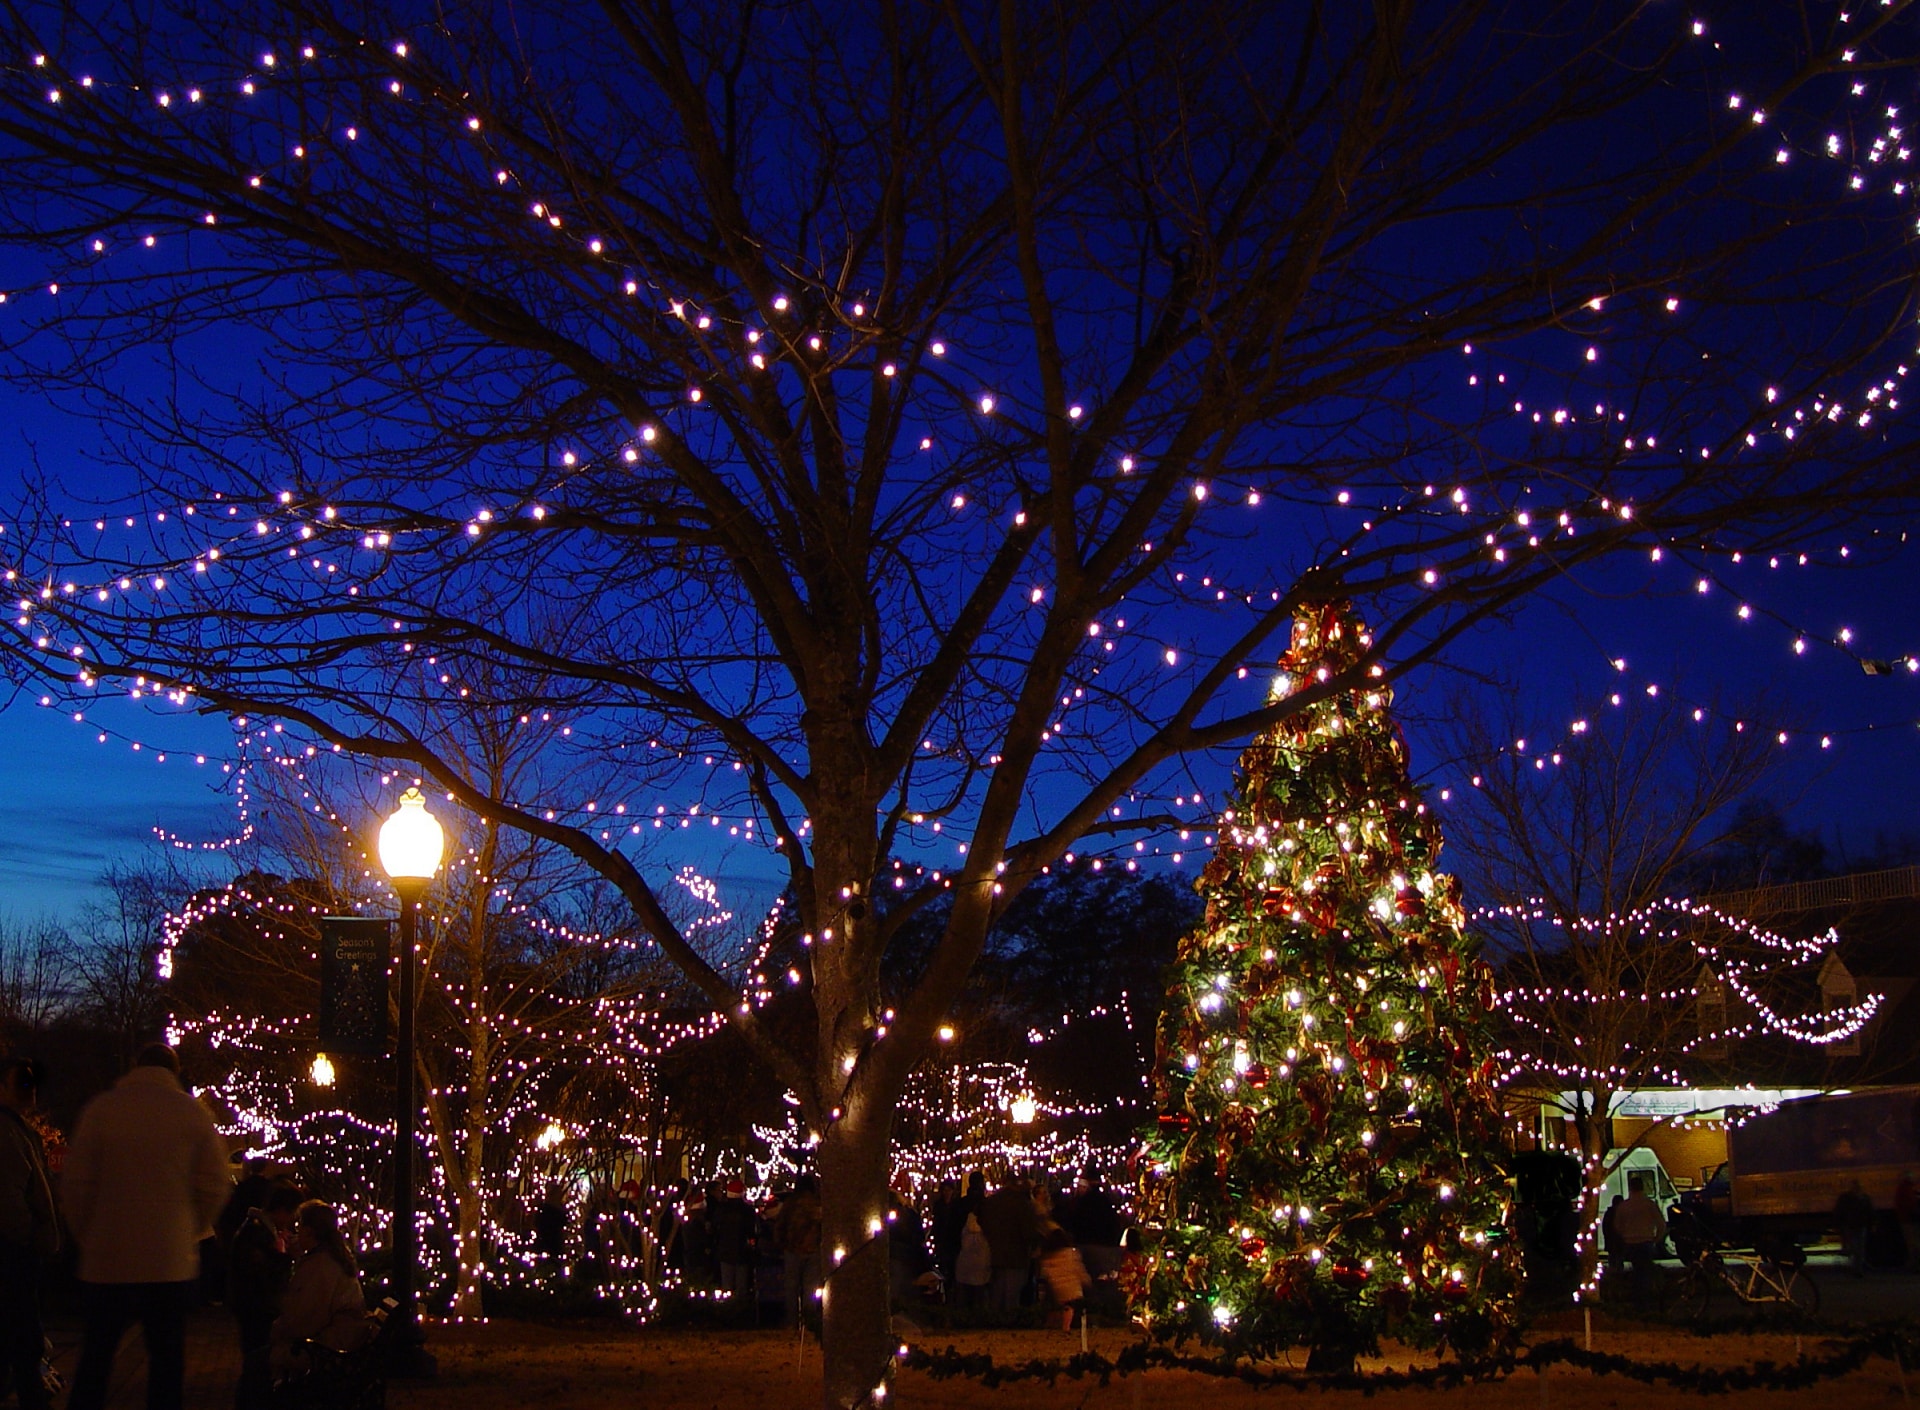 Shadrack's Christmas Wonderland Lights up Cobb County With Dazzling Display